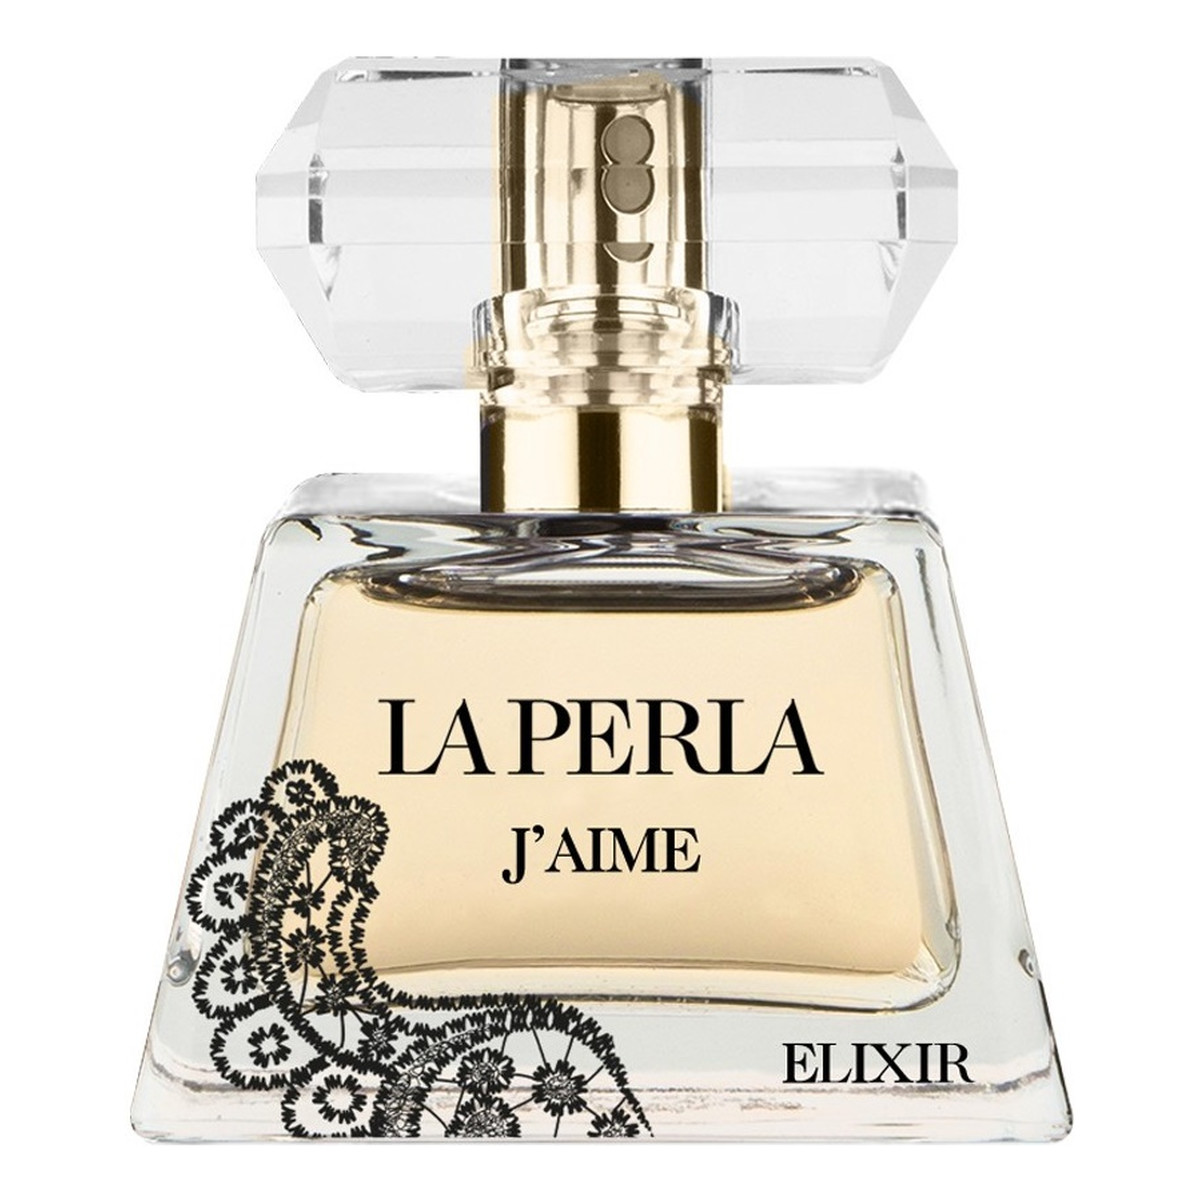 La Perla J'aime Elixir woda perfumowana 50ml